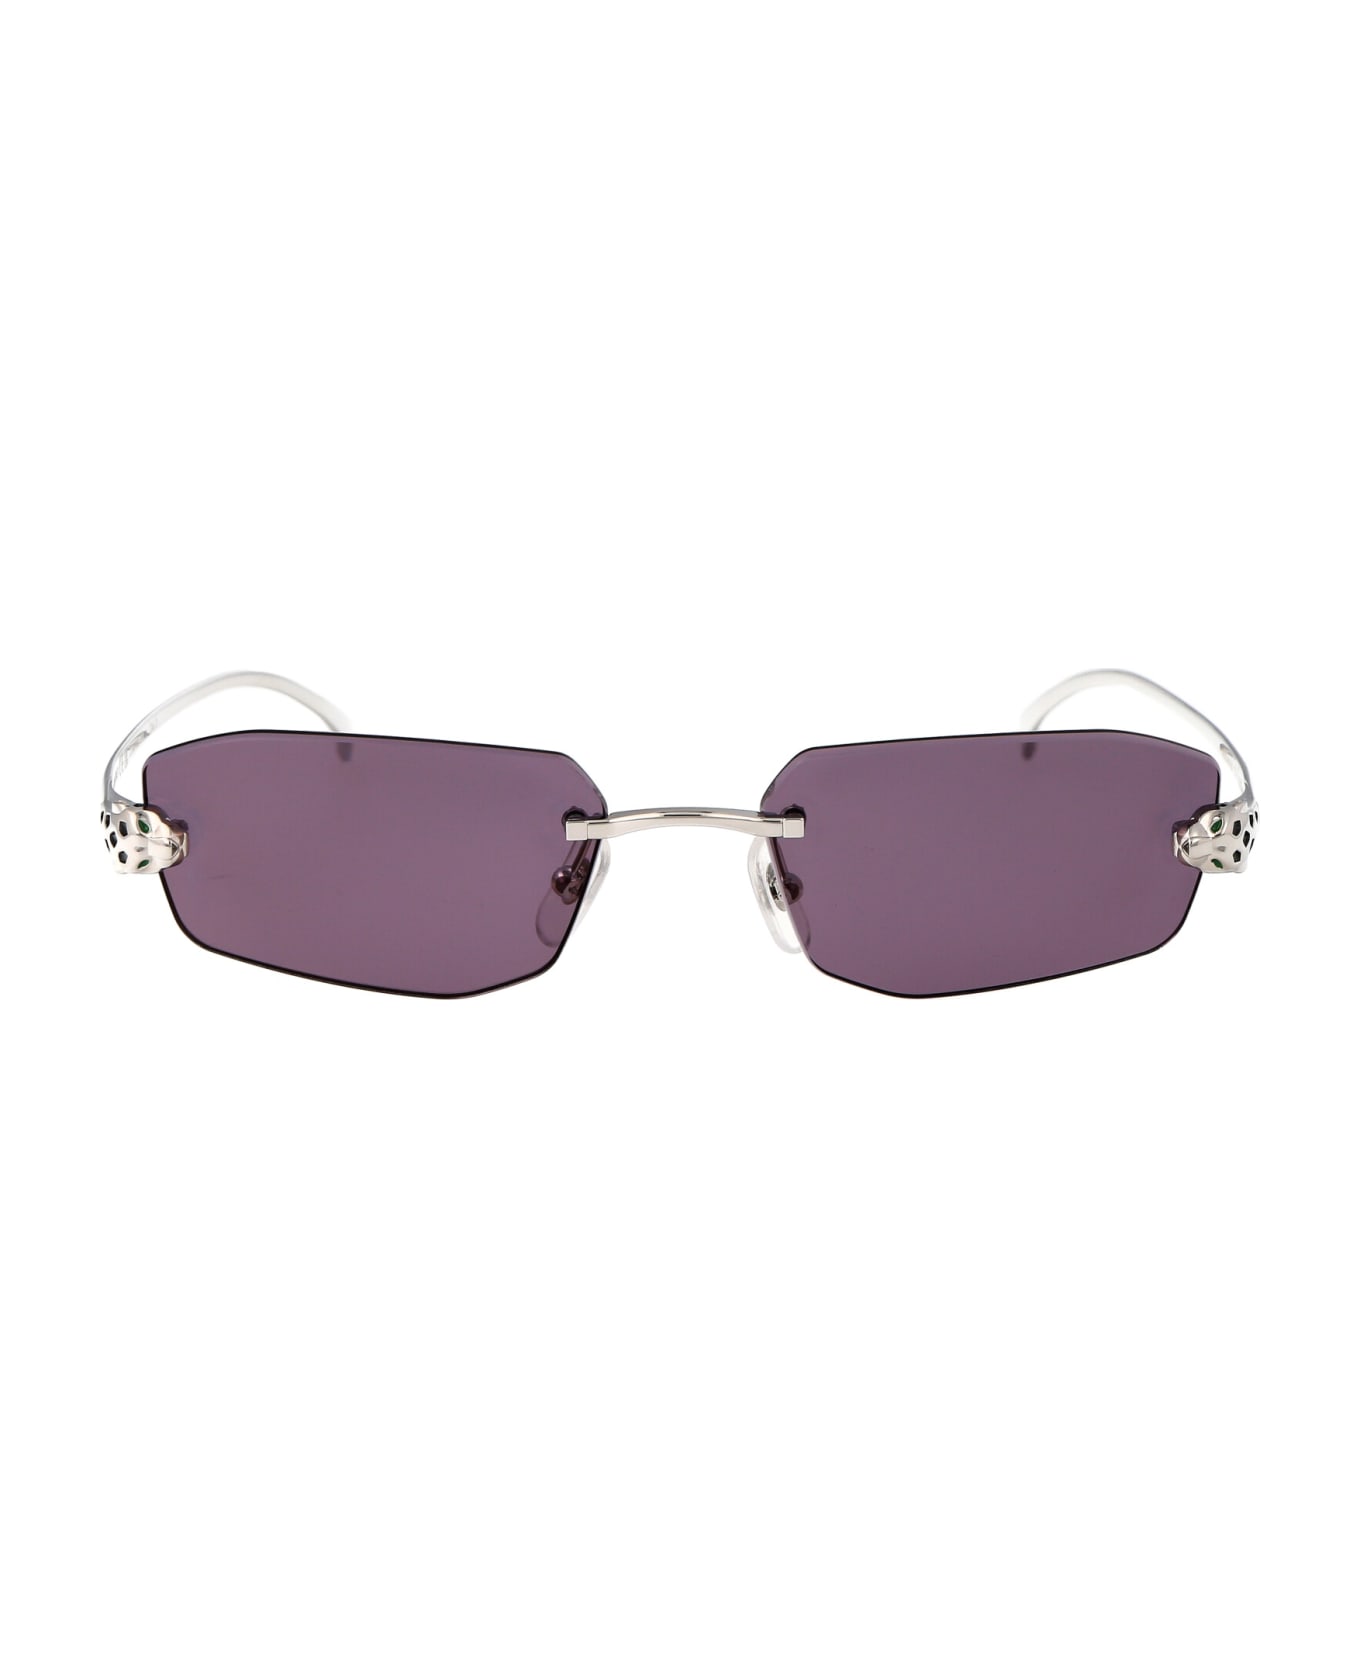 Cartier Eyewear Ct0474s Sunglasses - 004 SILVER SILVER VIOLET